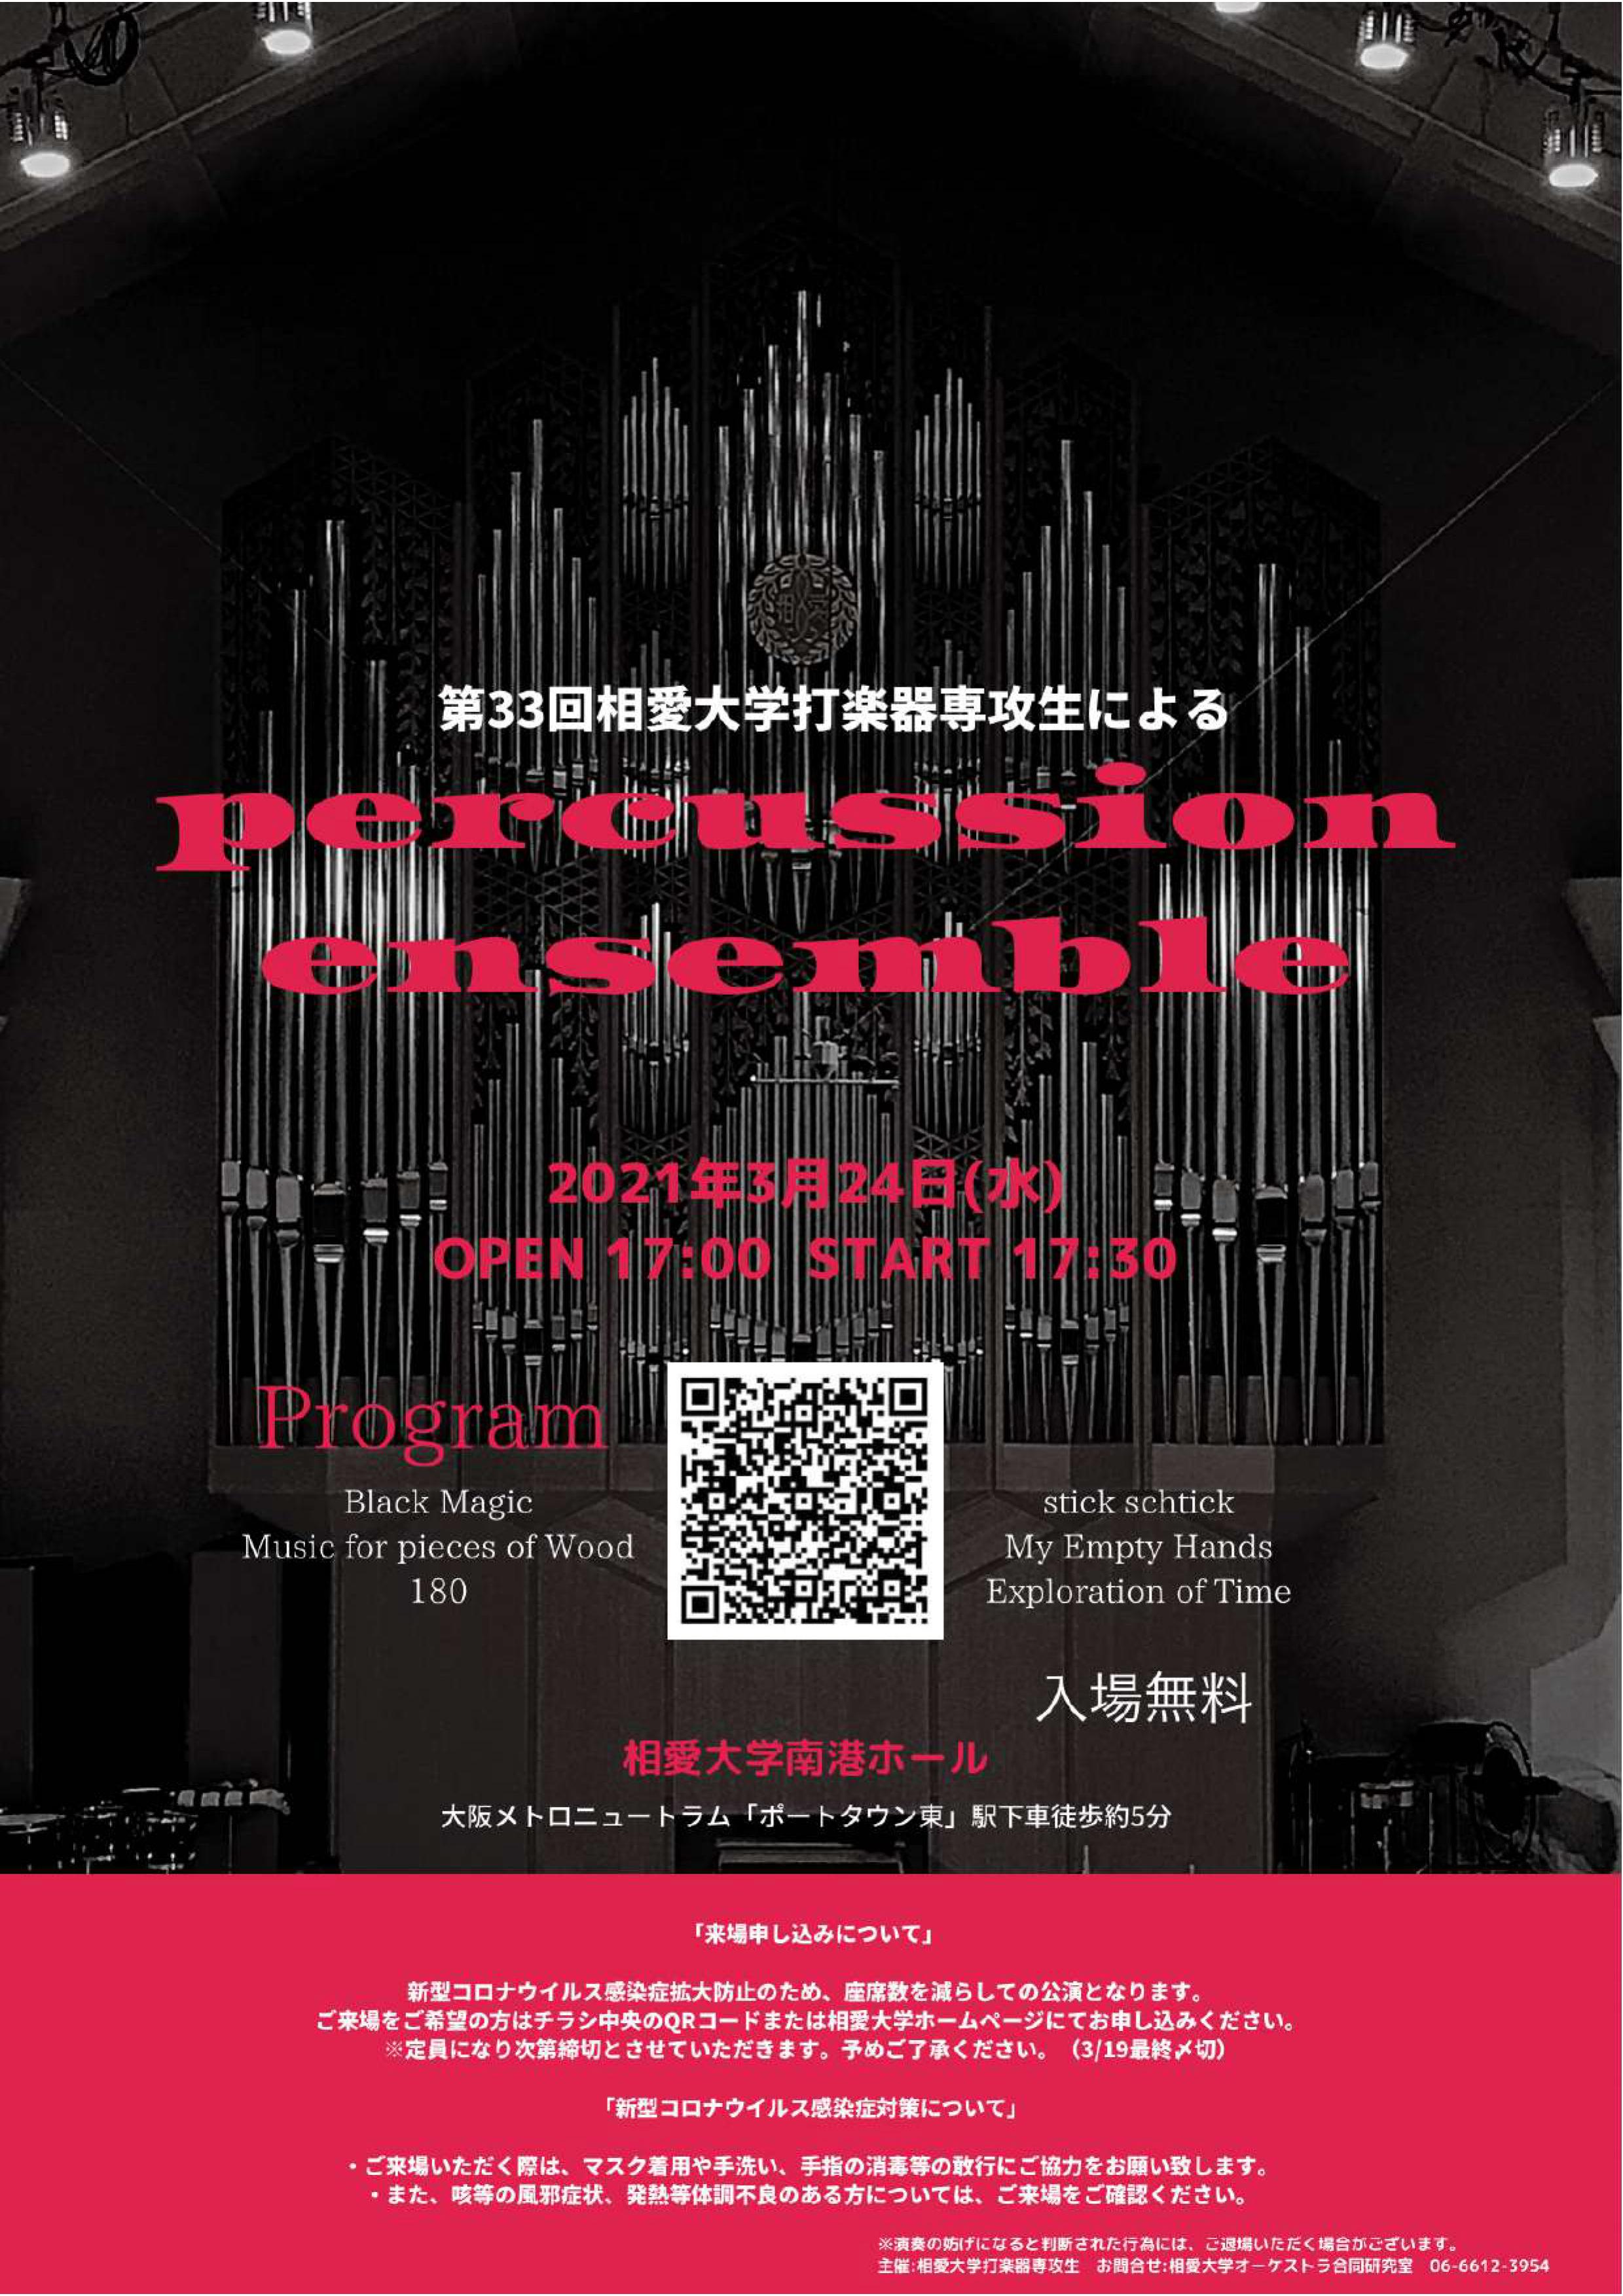 https://www.soai.ac.jp/information/event/20210324_percussion.jpg